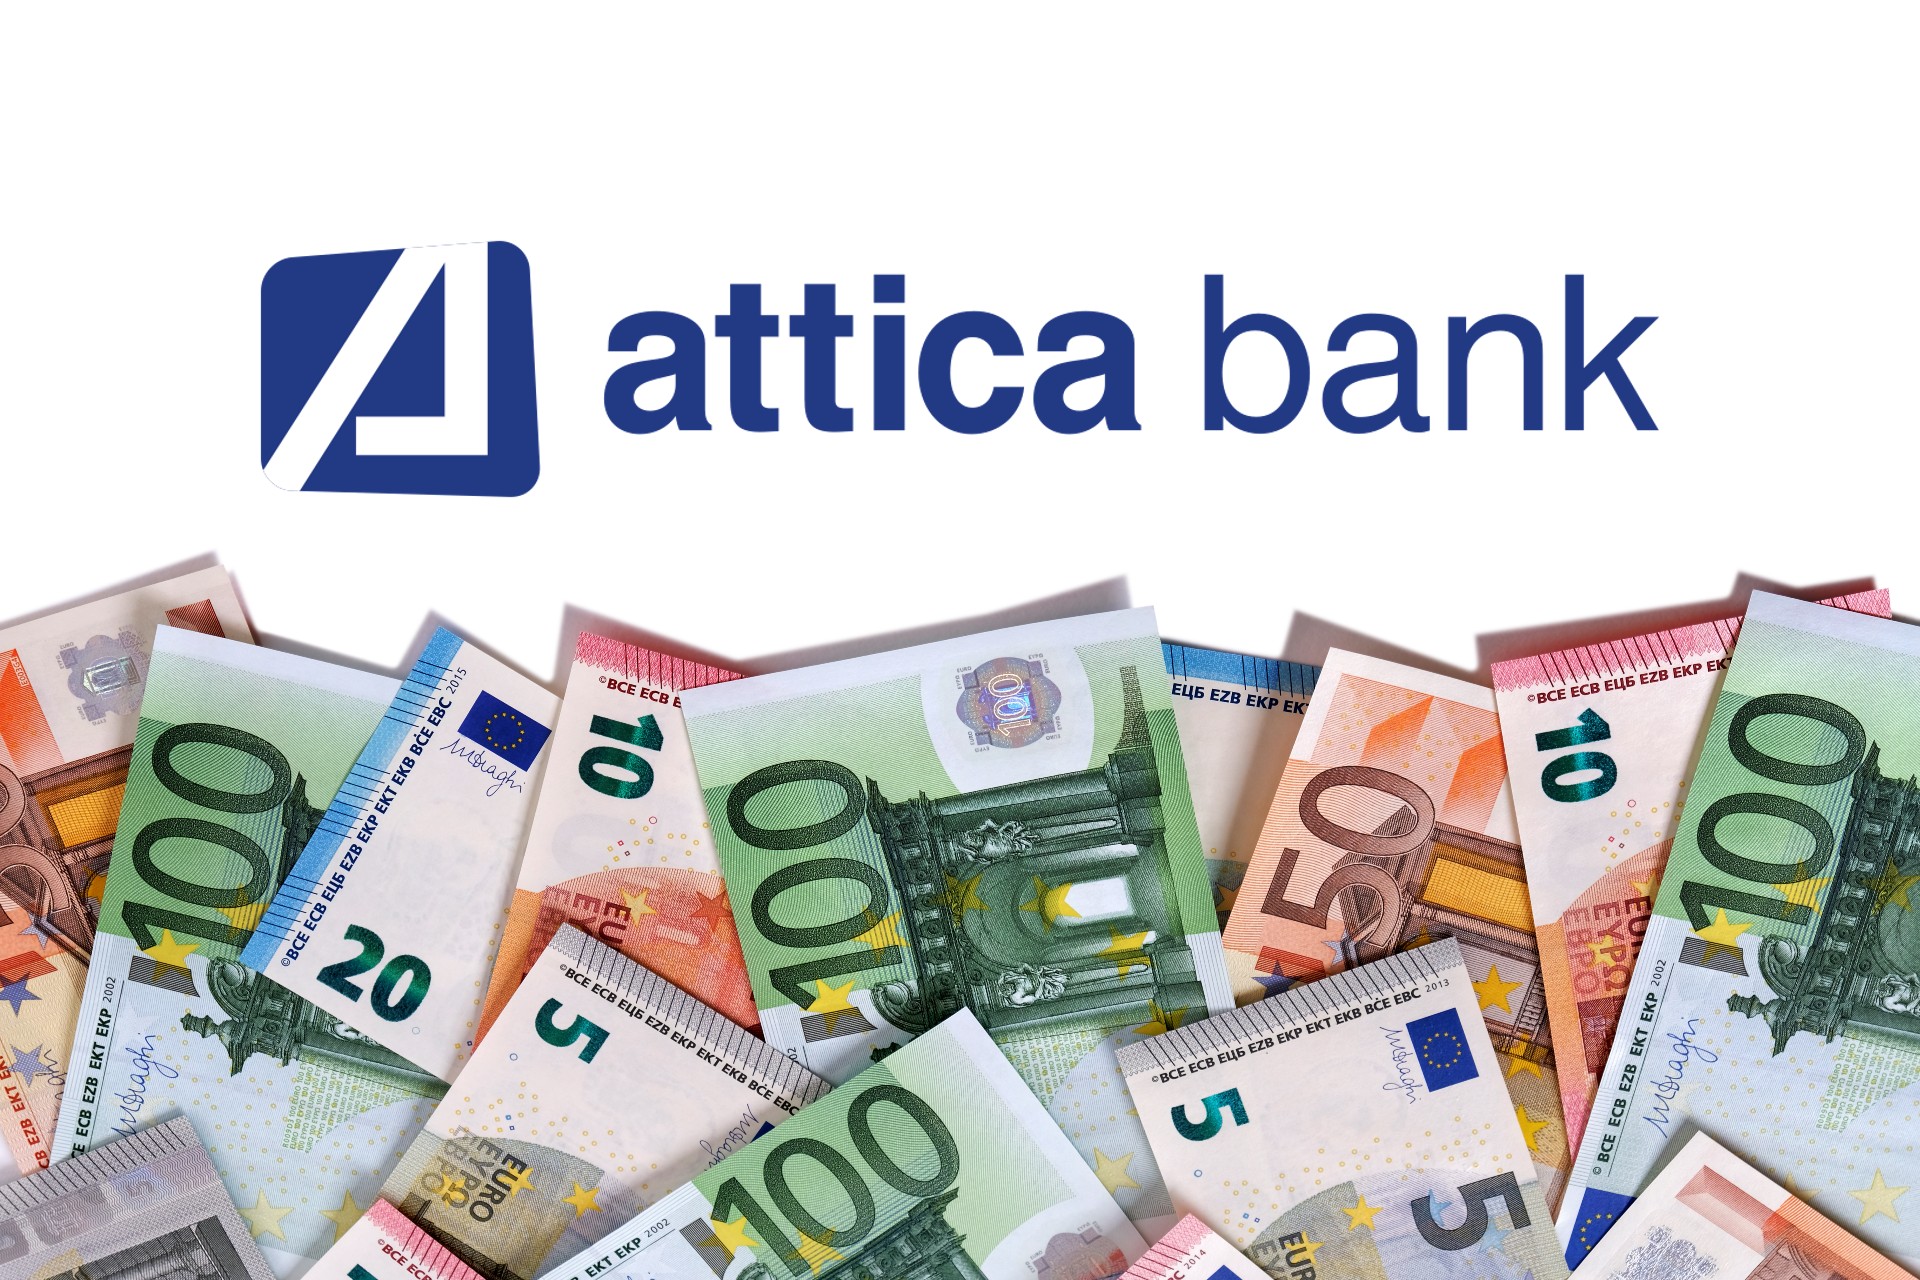 Kαι άλλος μνηστήρας ενεφανίσθη για την Attica Bank, πέραν της Thrivest; Λέτε;